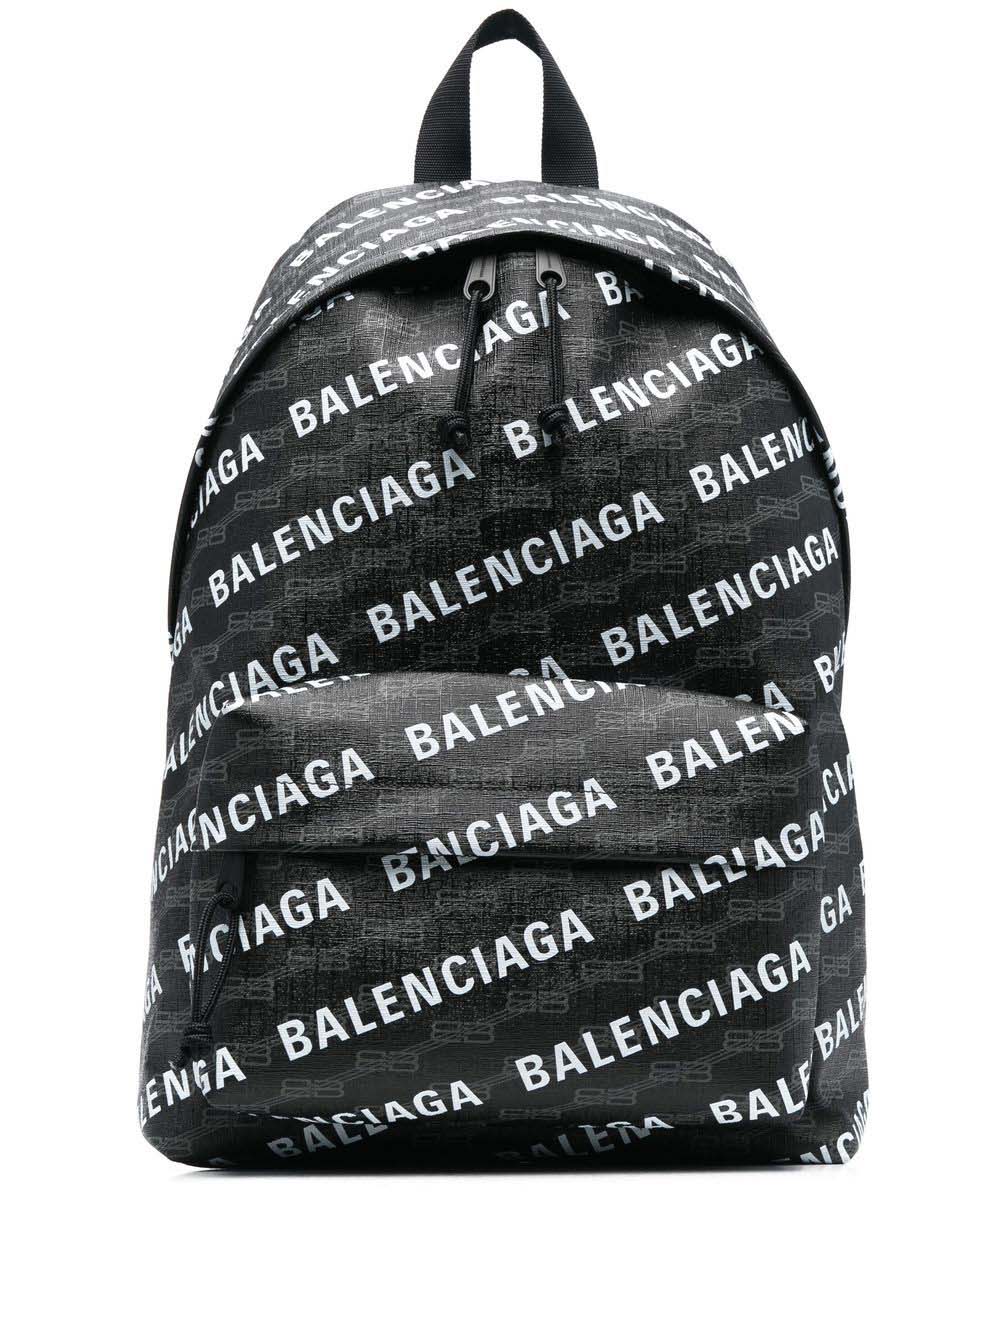 Balenciaga Signature Logo Print Backpack Black/White in Canvas